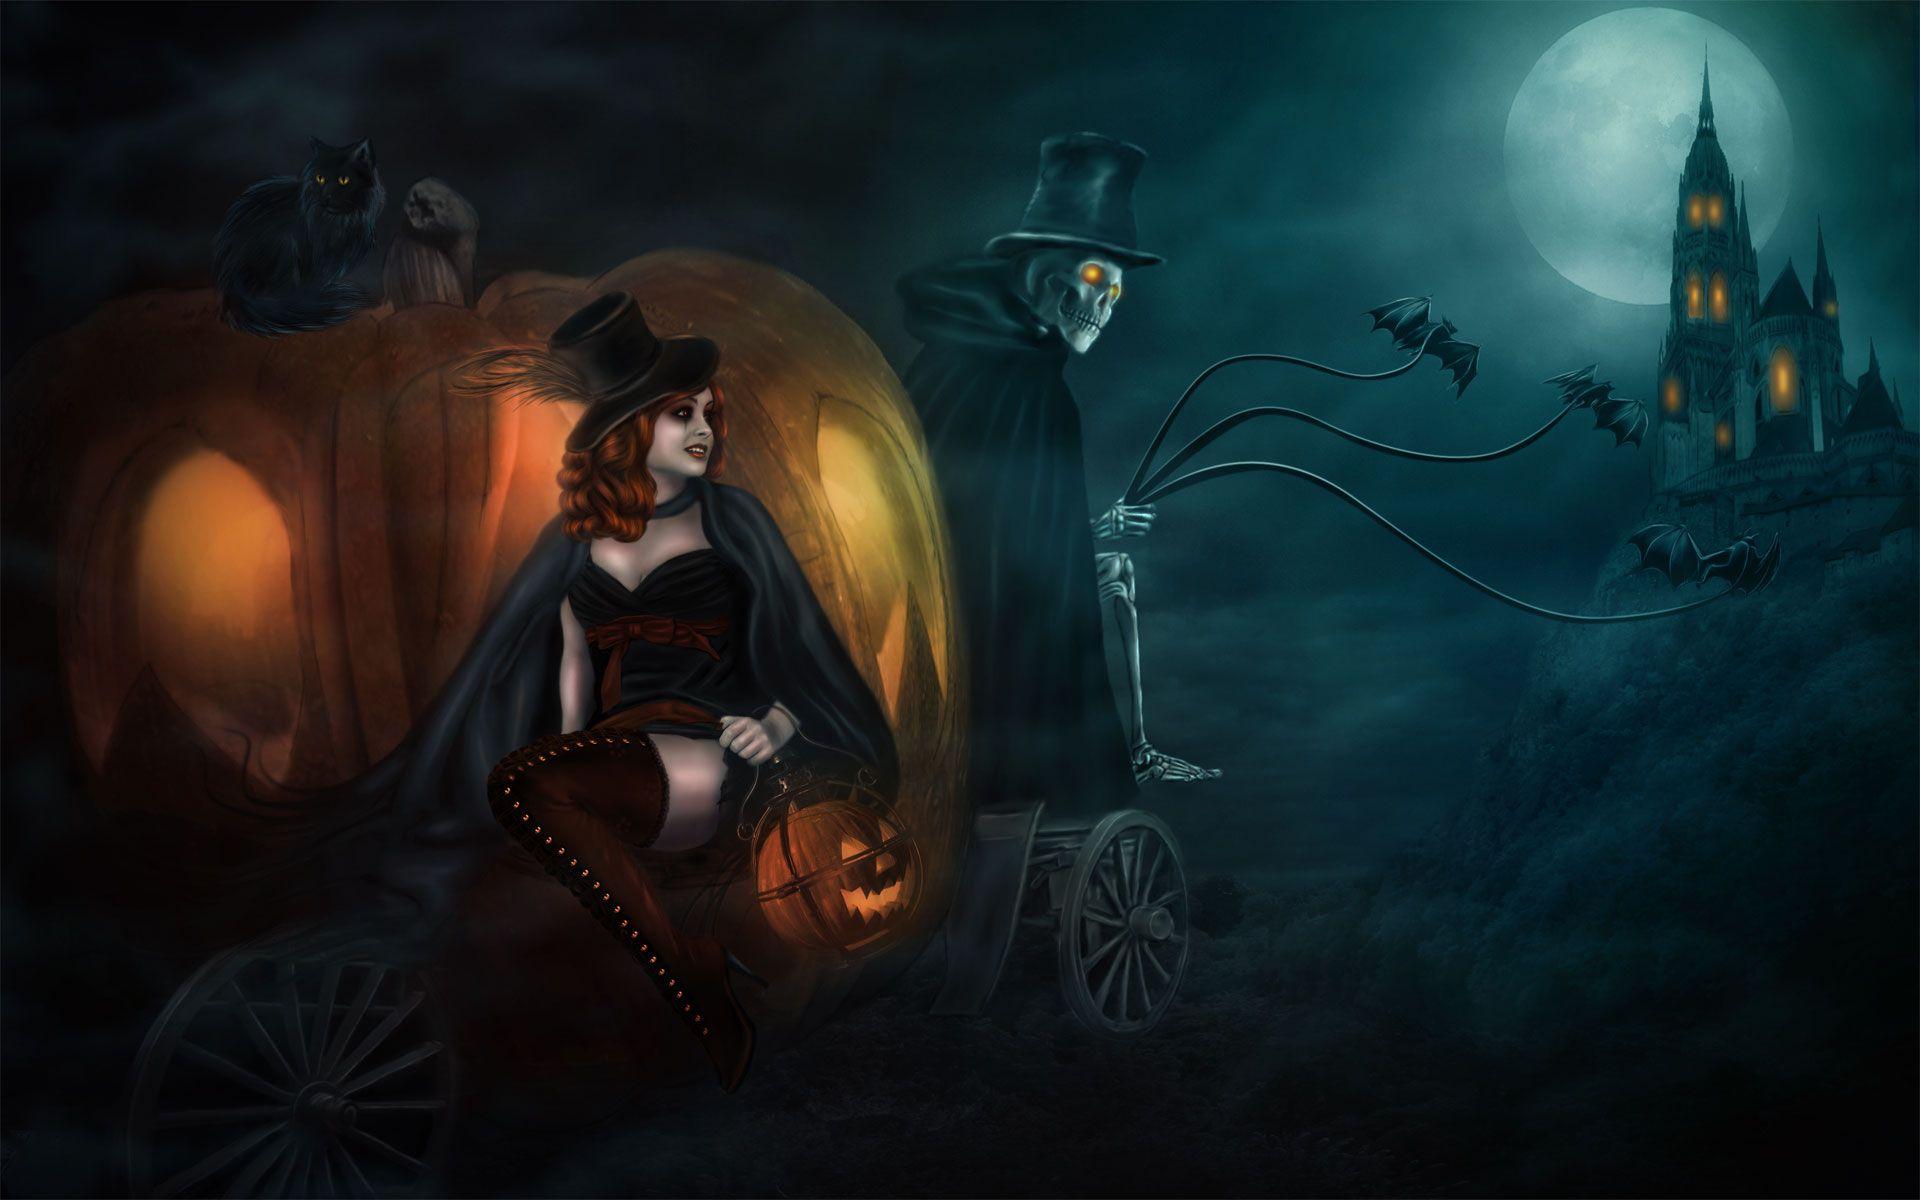 Spooky halloween scenery - riloaffiliates